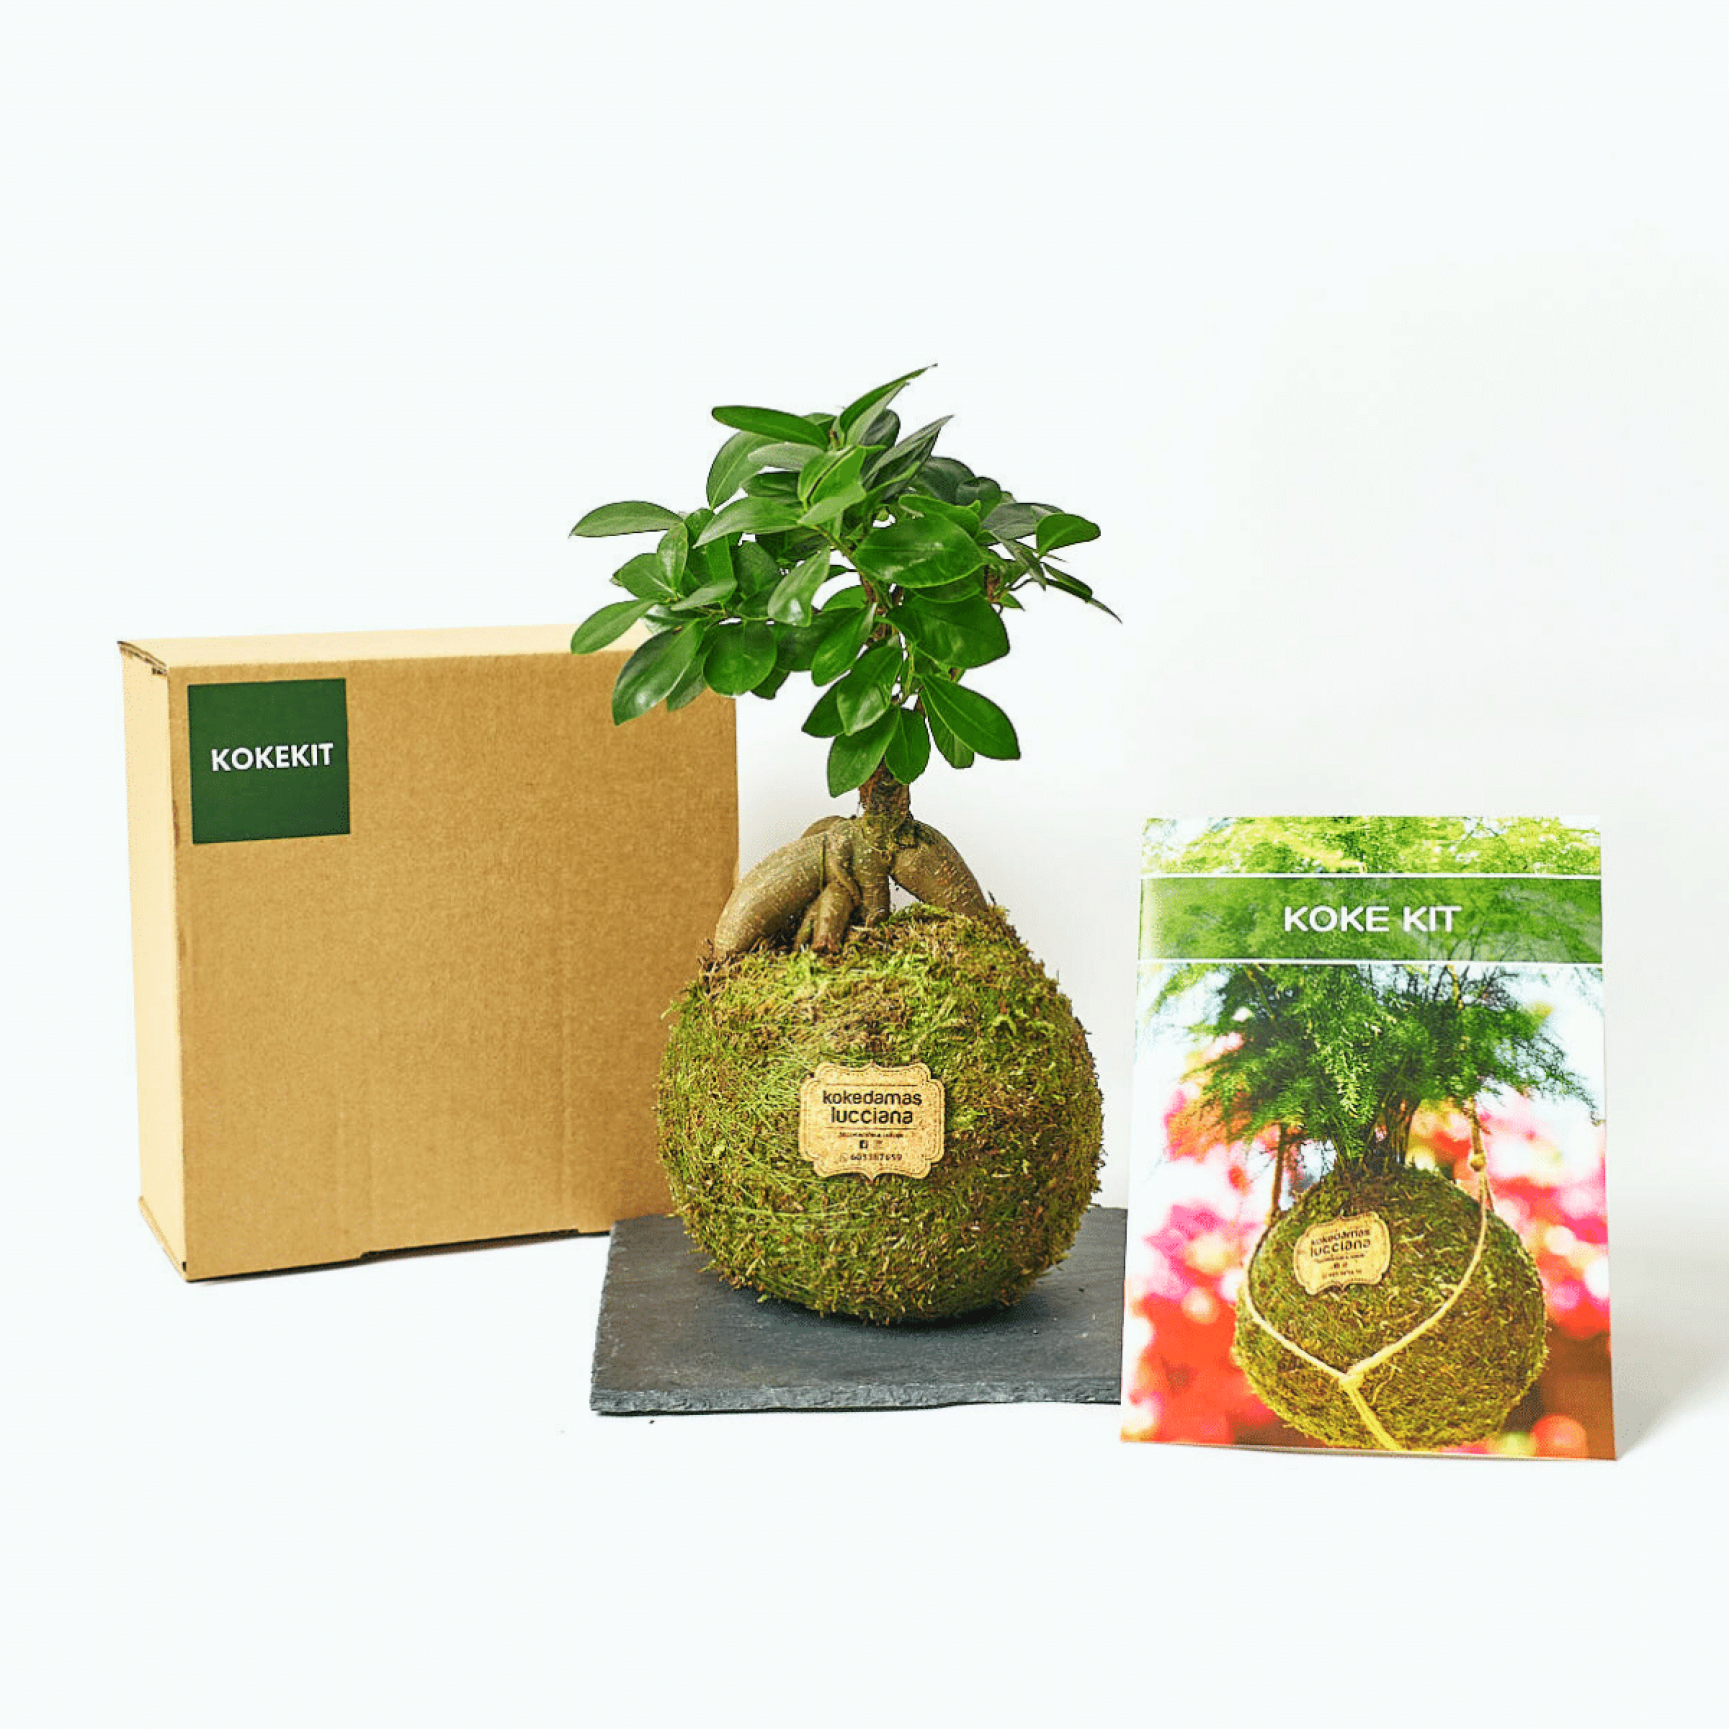 Koke Kit Ficus Ginseng - DIY Kokedama - Kokedamas Lucciana